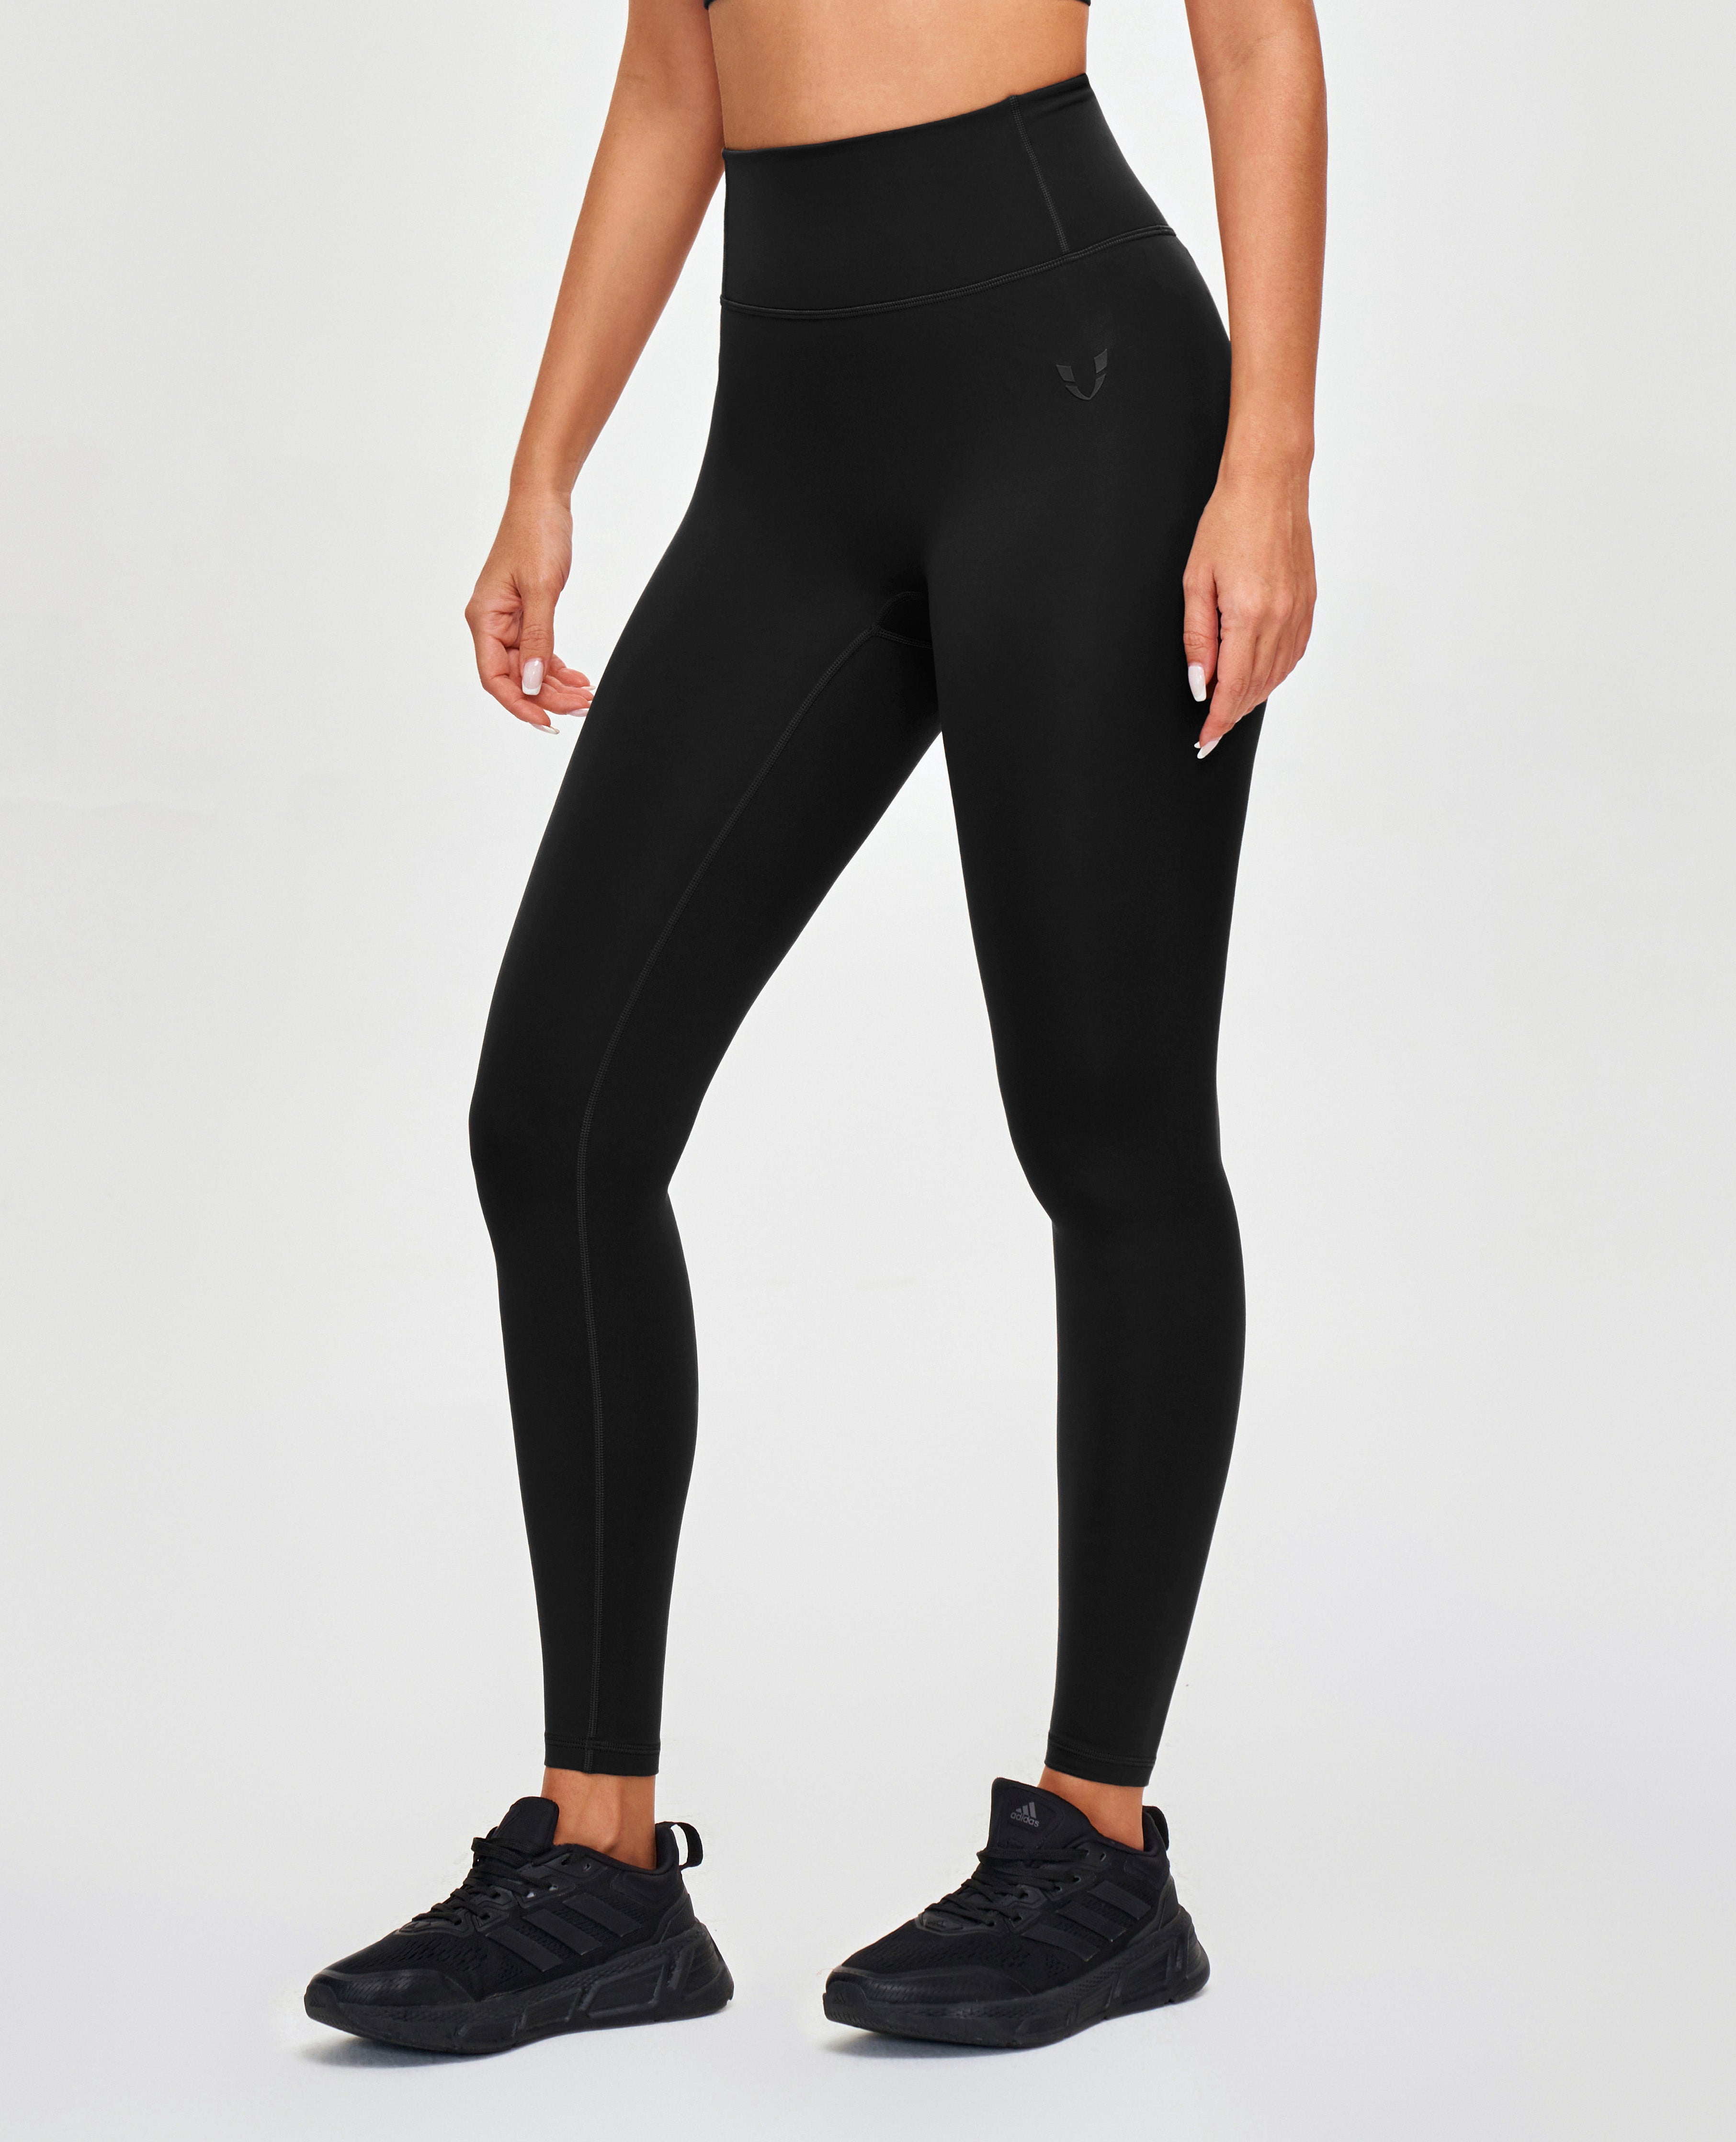 Workout-Leggings mit hoher Taille – Schwarz